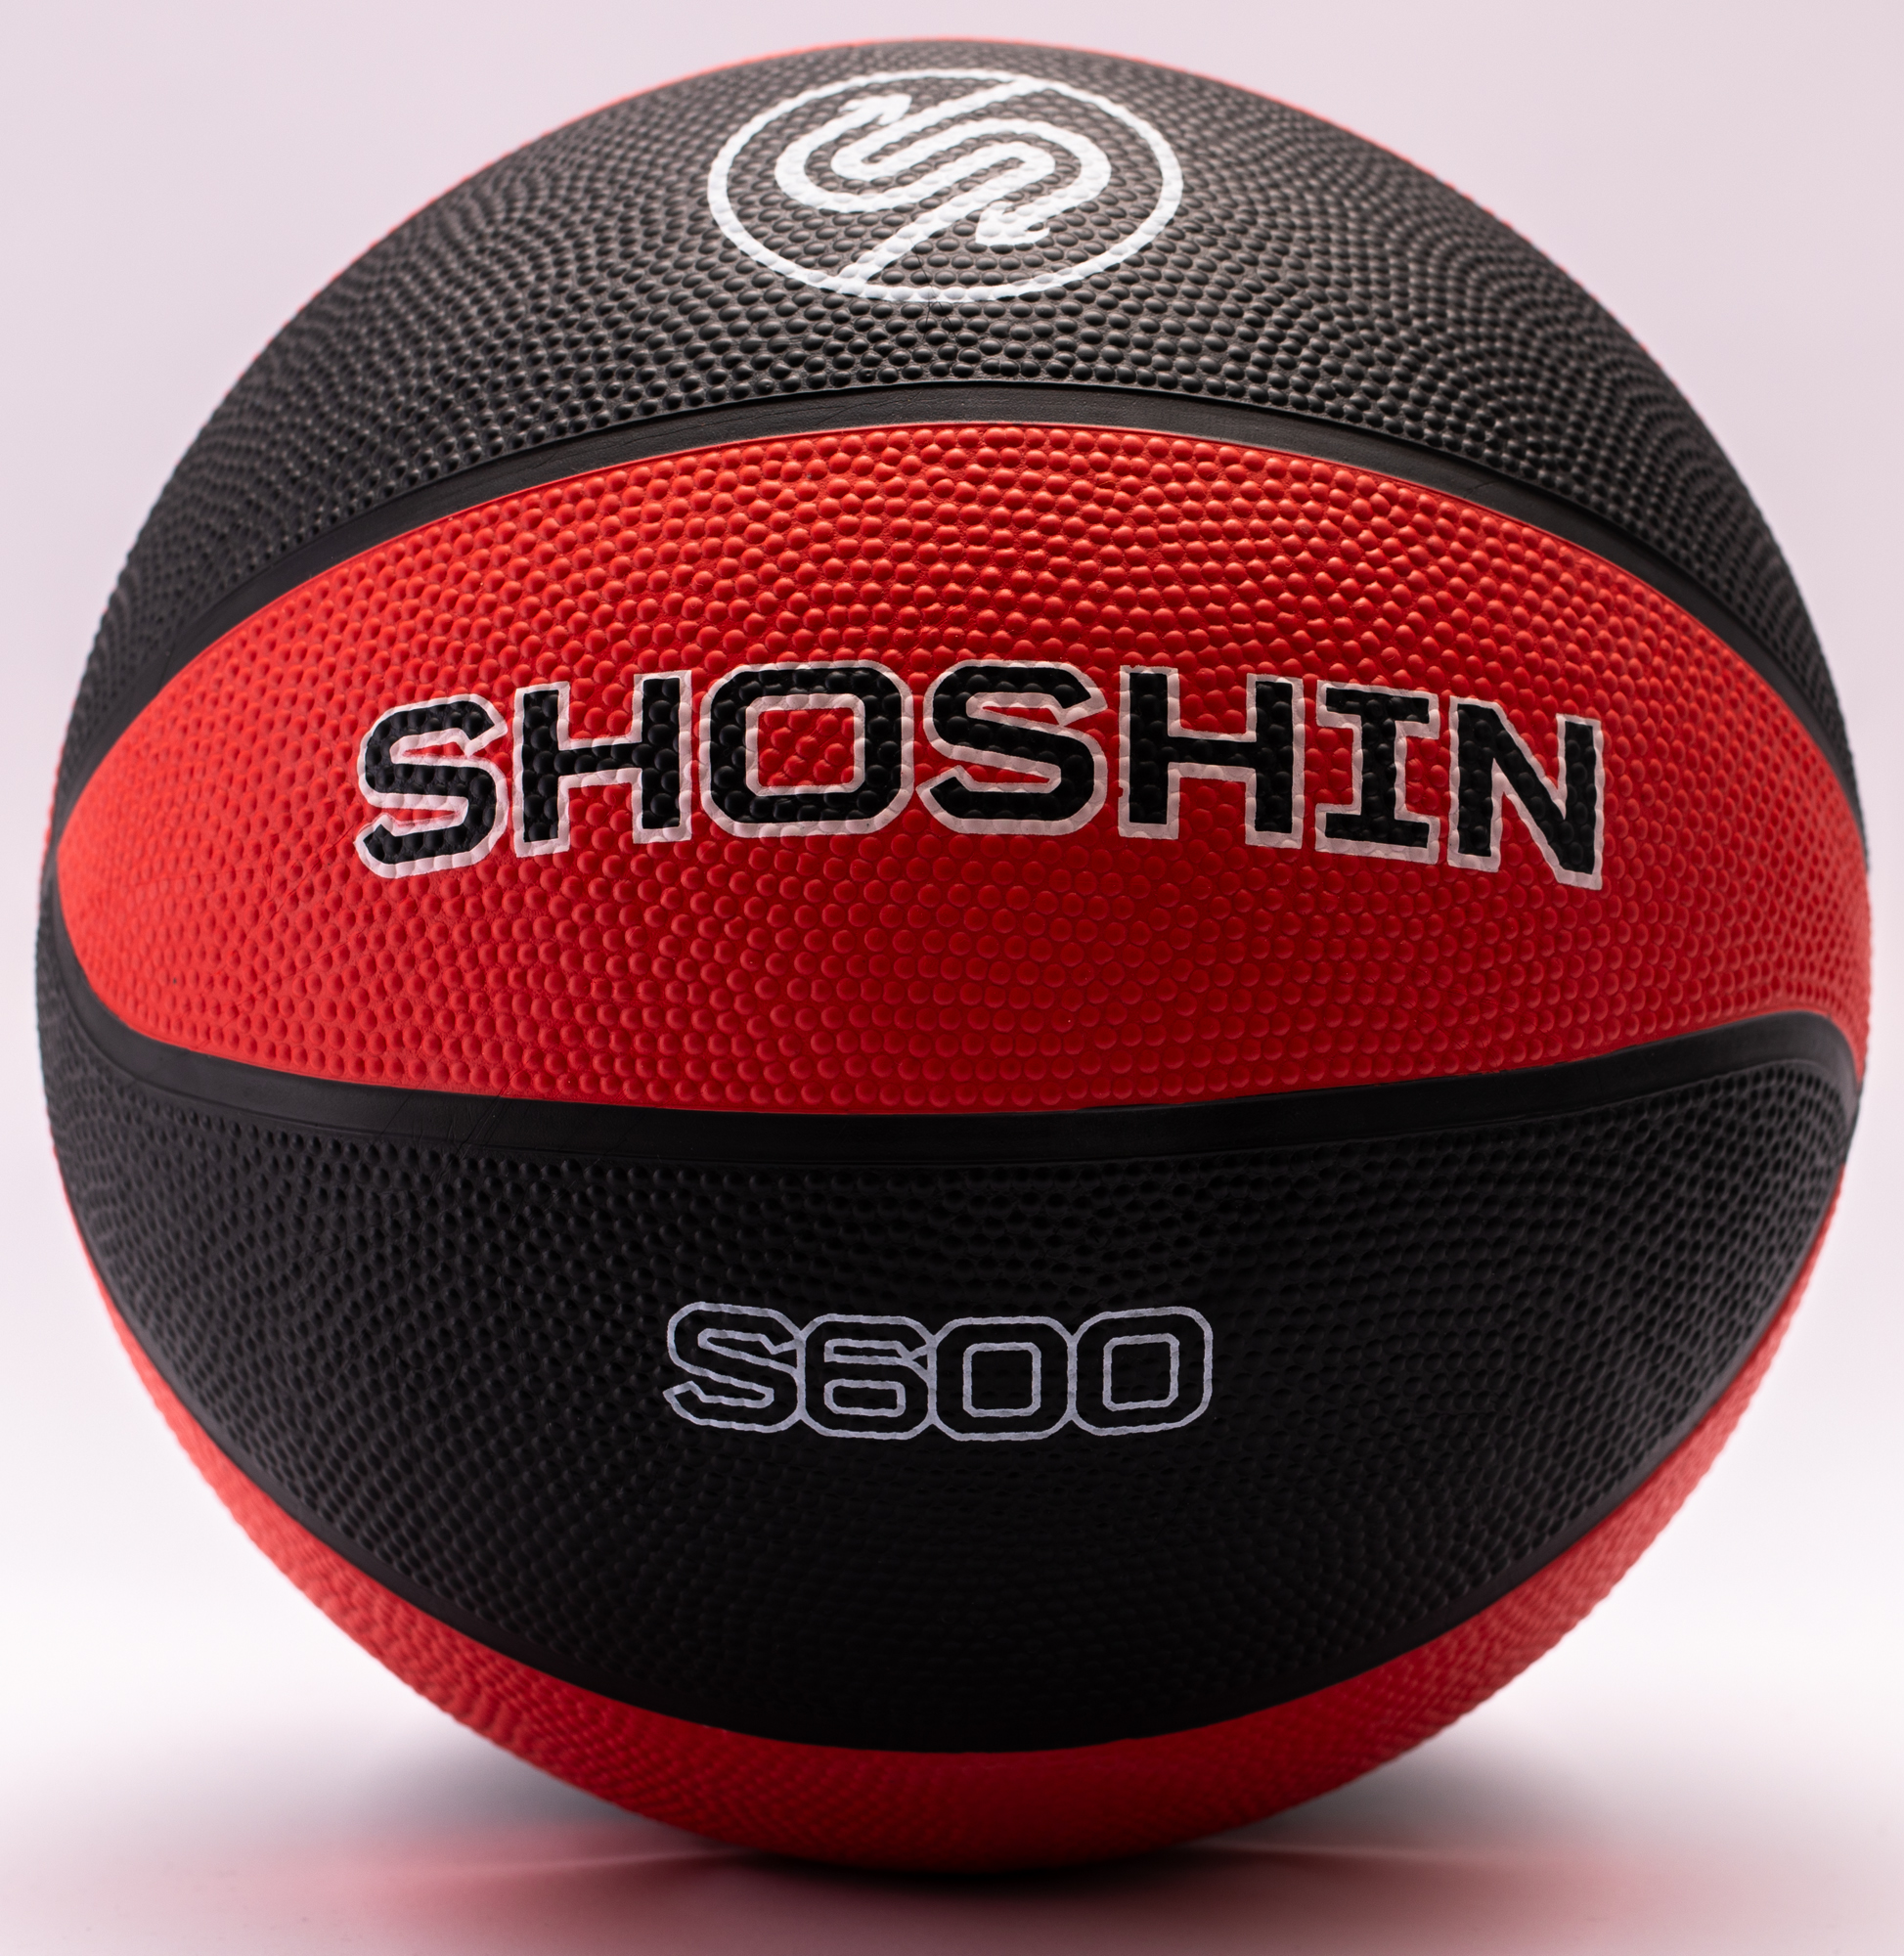 GP056571AA - SHOSHIN Training Basketball - Red/Black - 6 | GLS ...